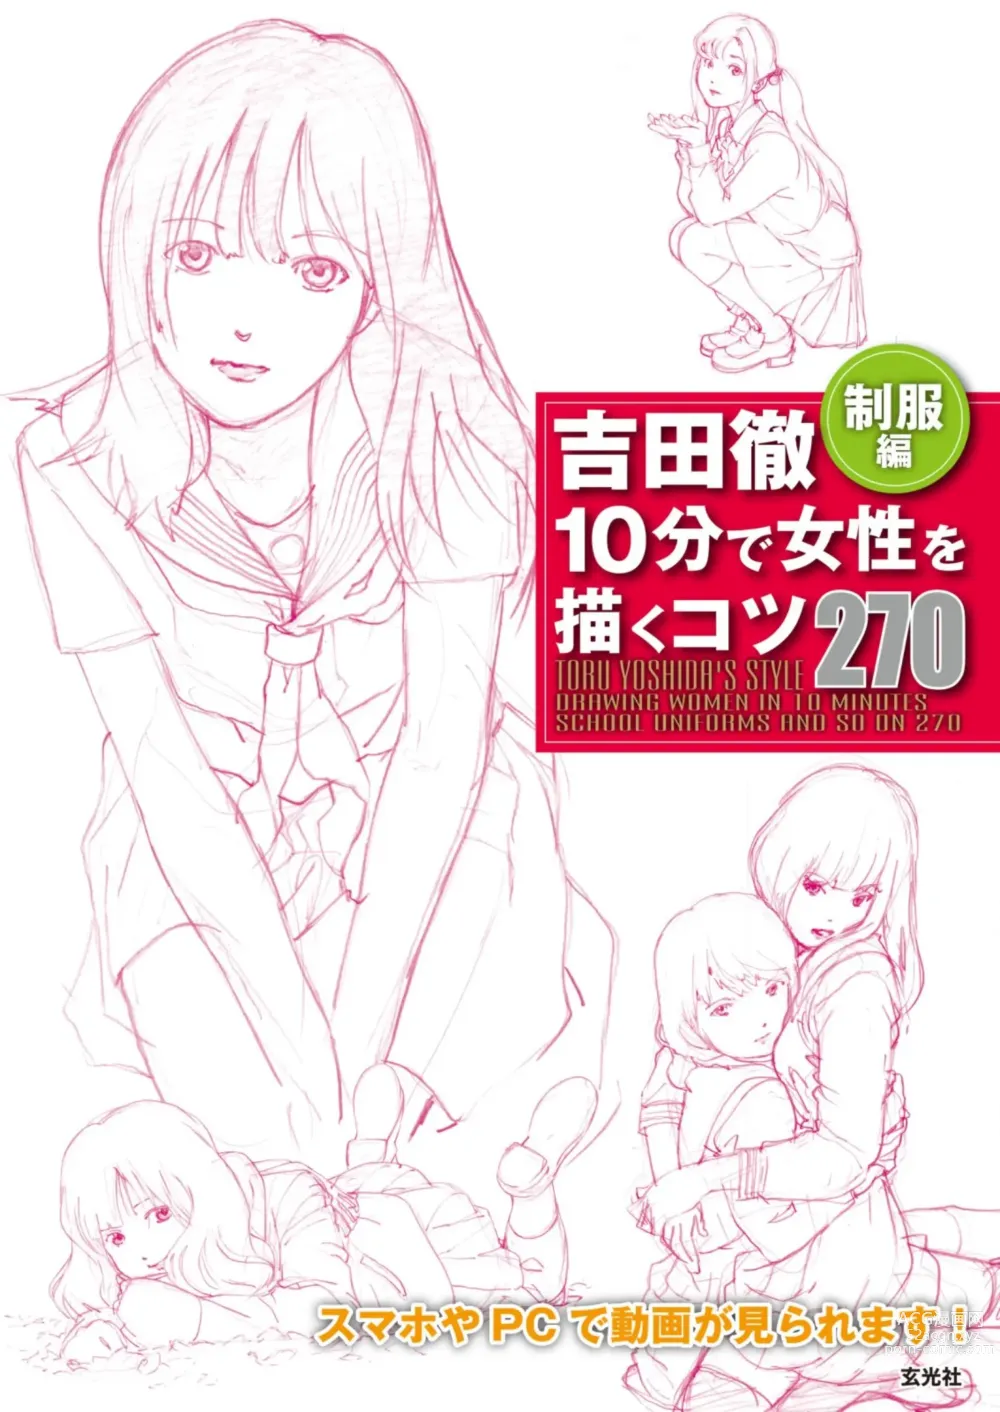 Page 1 of manga Toru Yoshida Tips for drawing women in 10 minutes 270 Uniforms